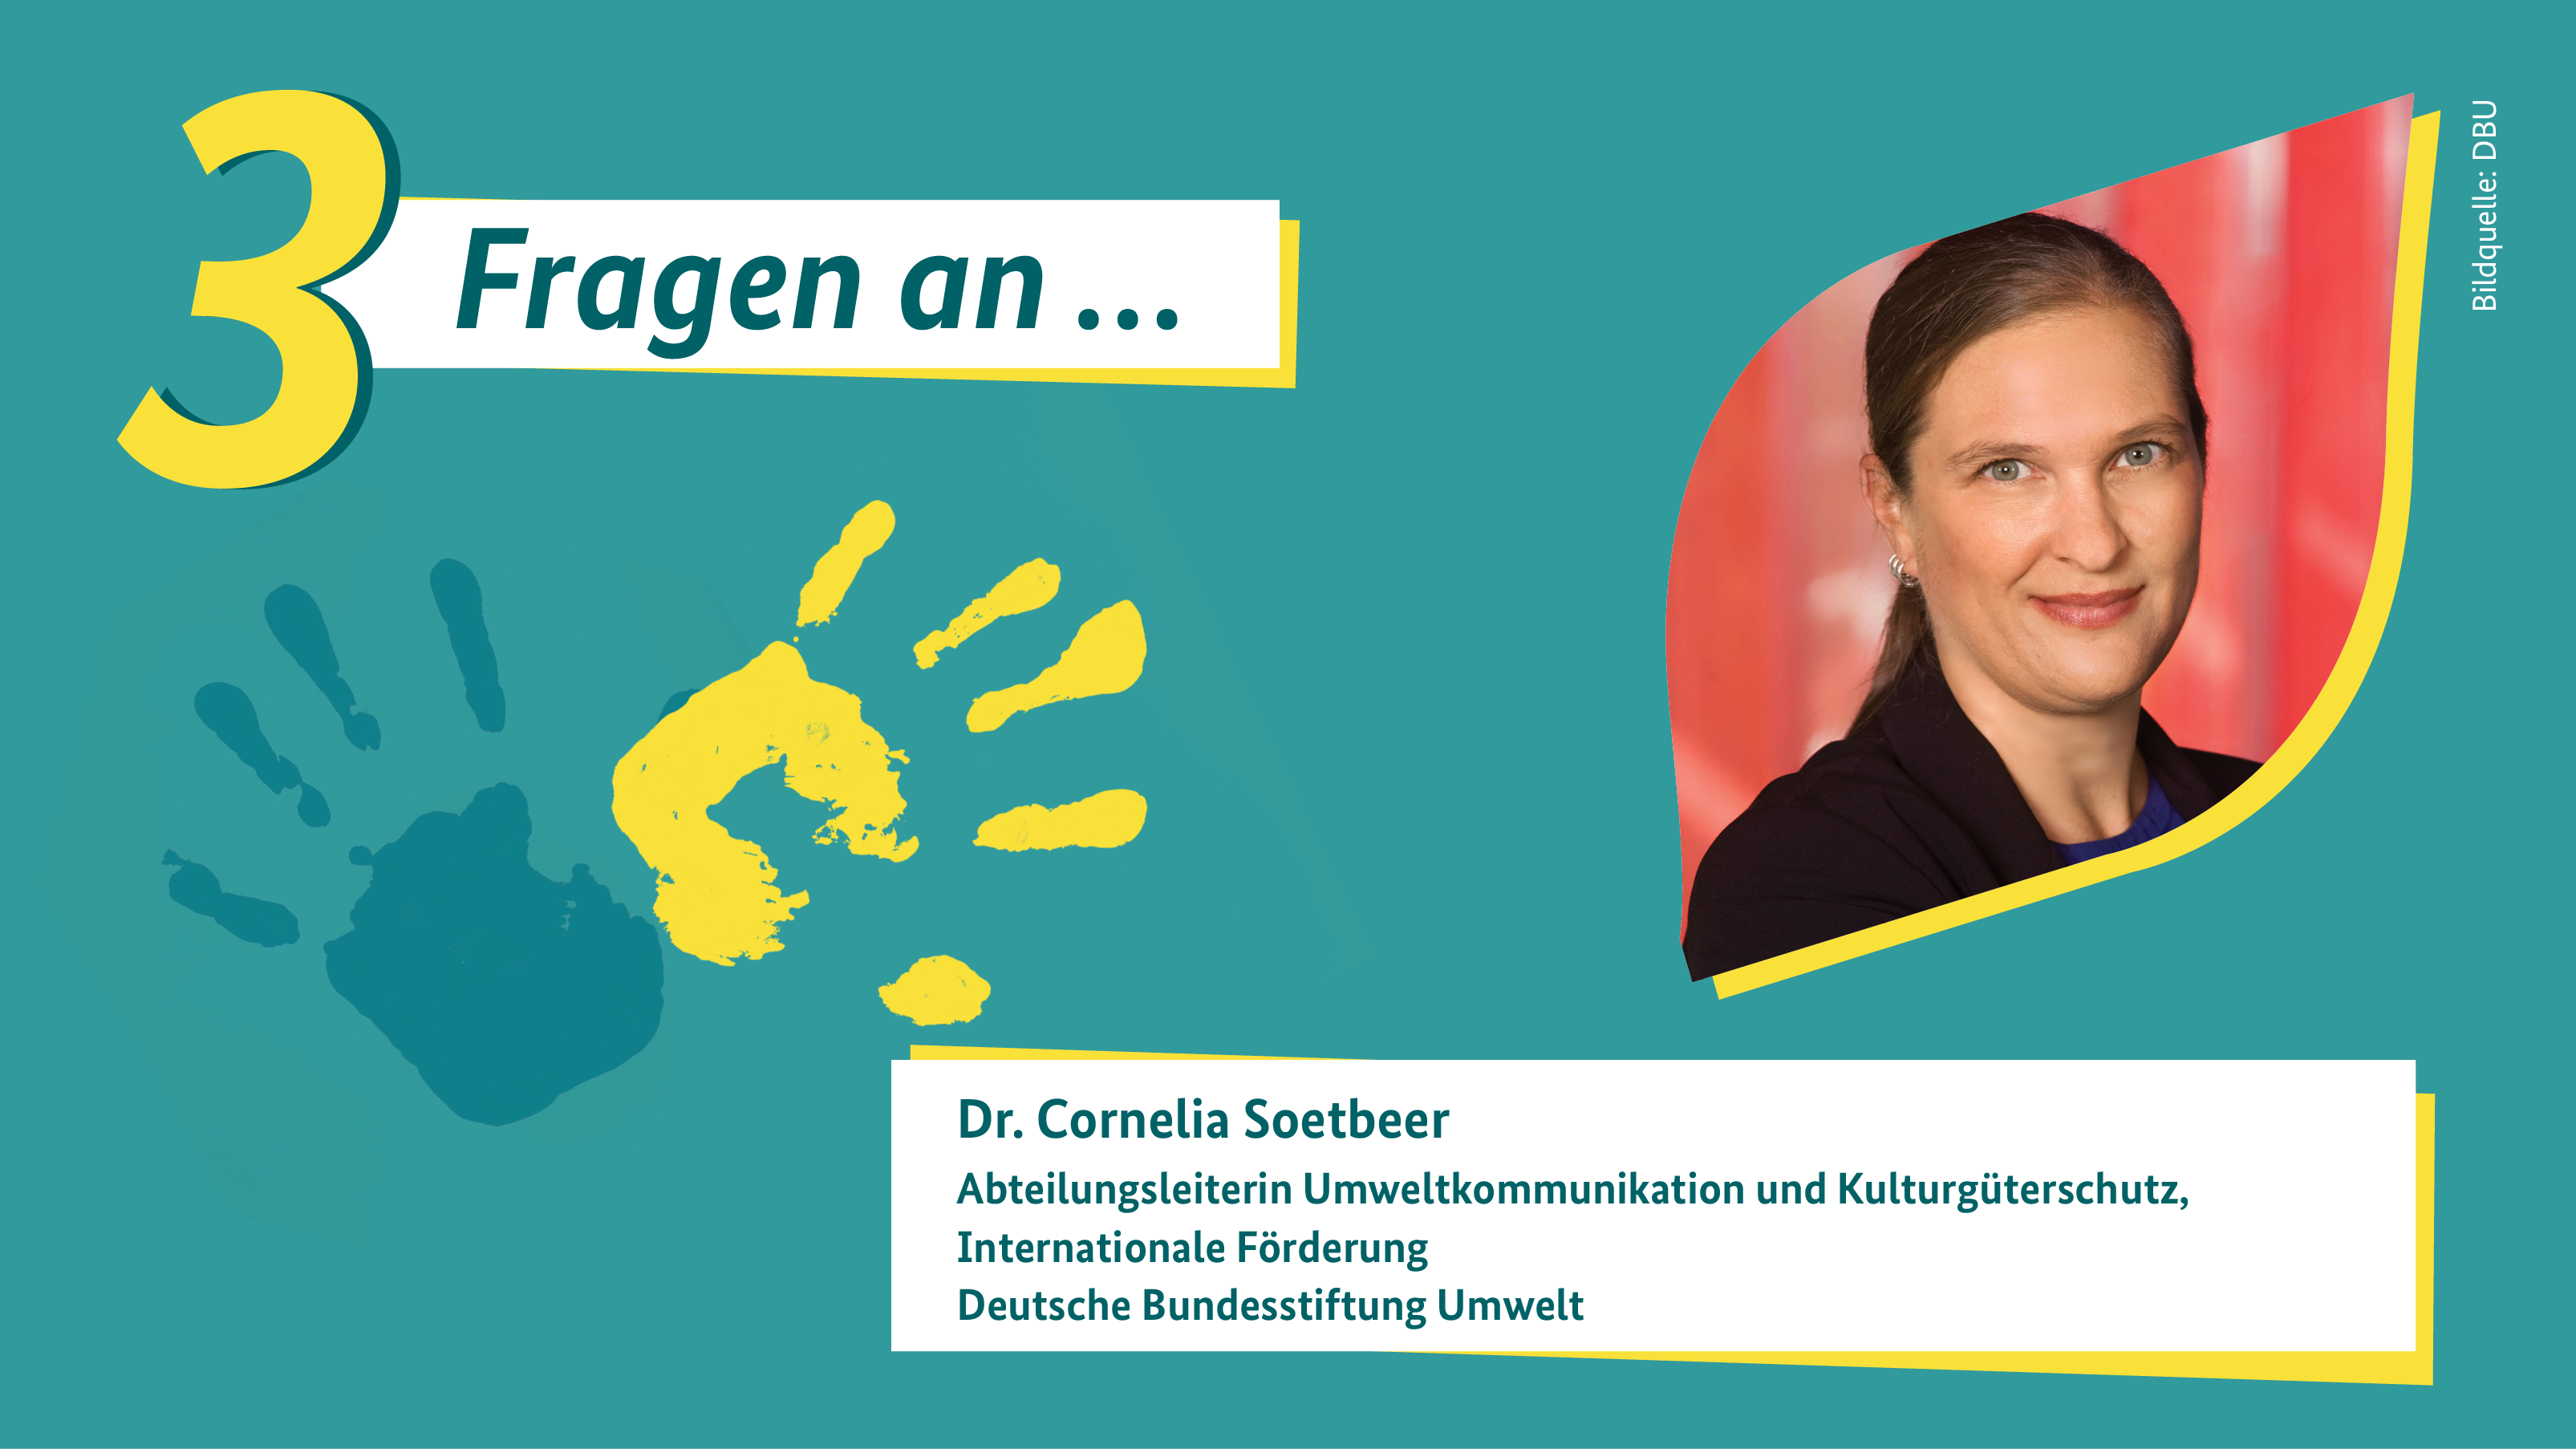 Grafik zu den 3 Fragen an Dr. Cornelia Soetbeer